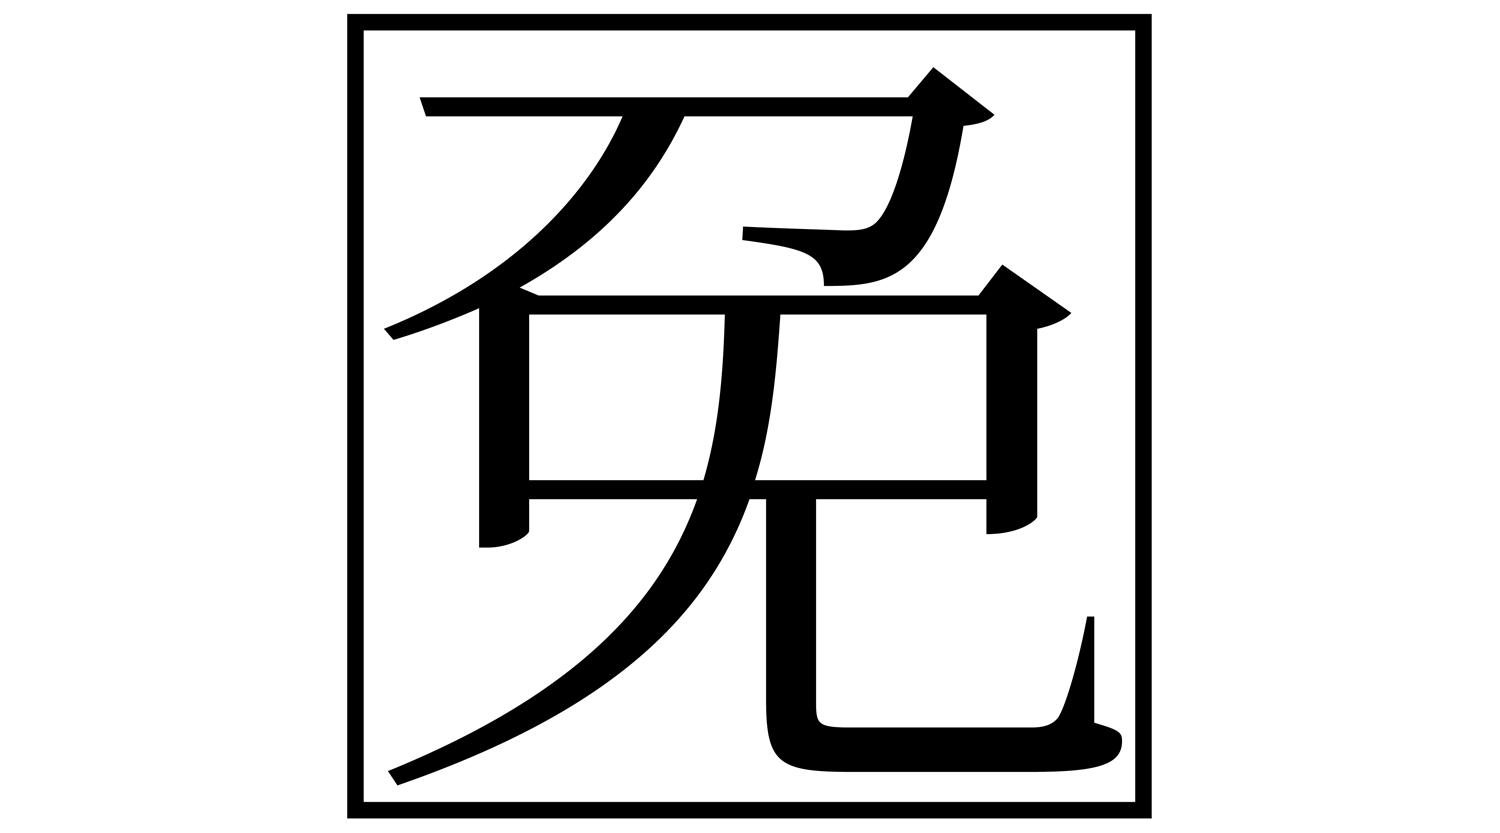 CJK Unified Ideograph “免” (U+514D)